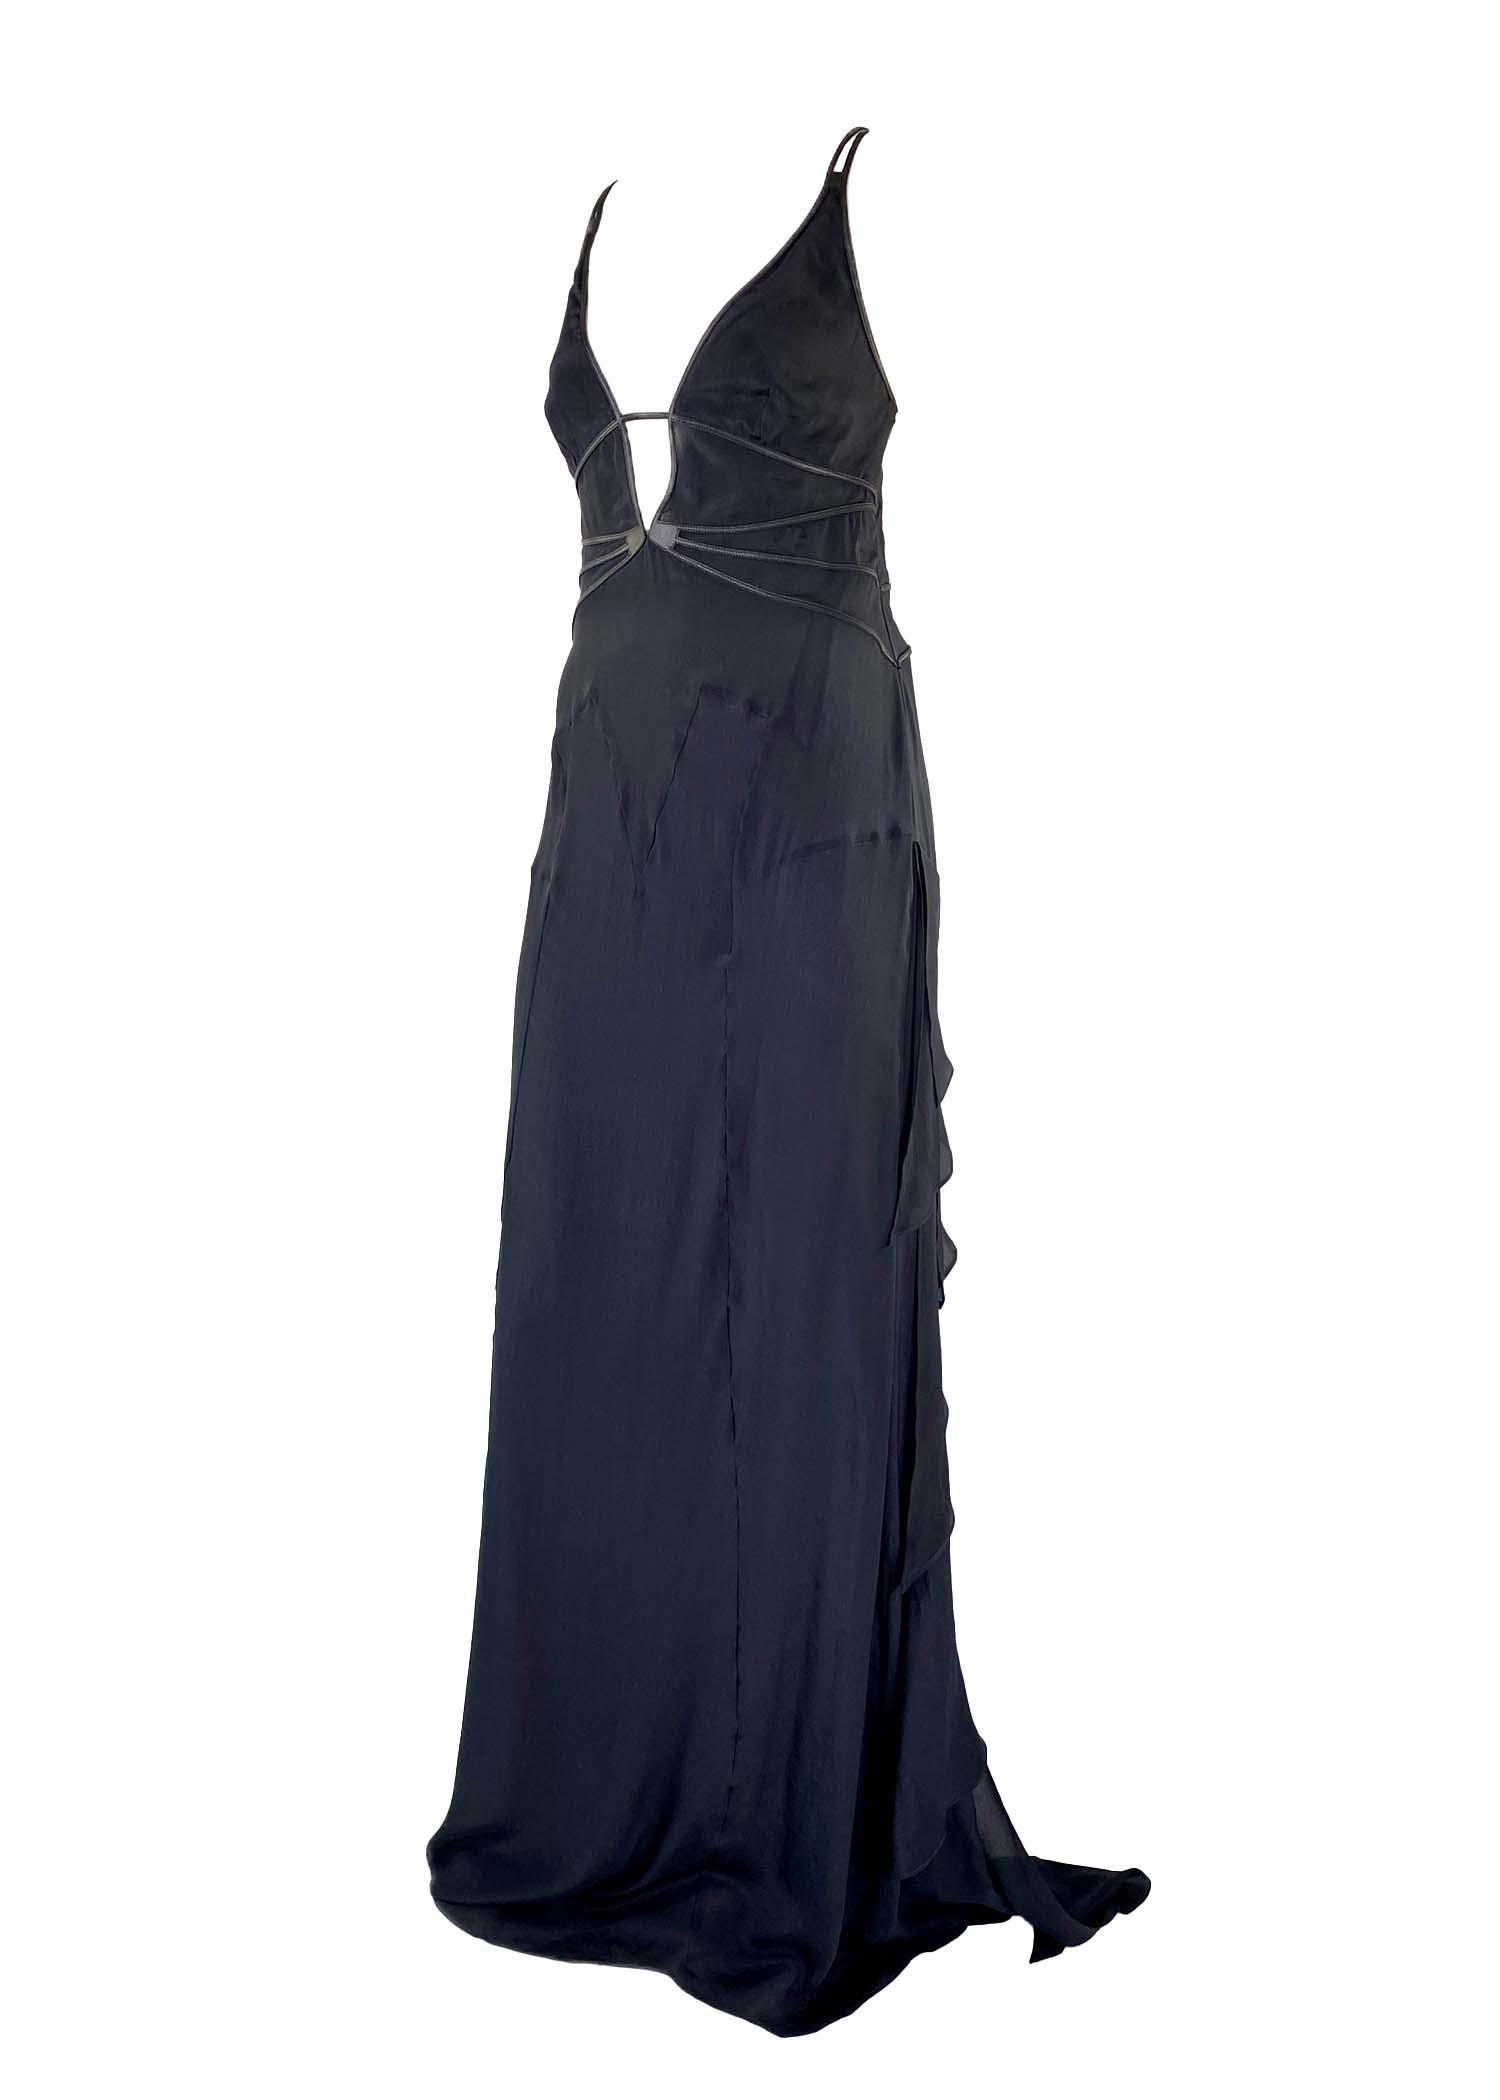 NWT F/W 2003 Gucci by Tom Ford Black Silk Gown For Sale 3